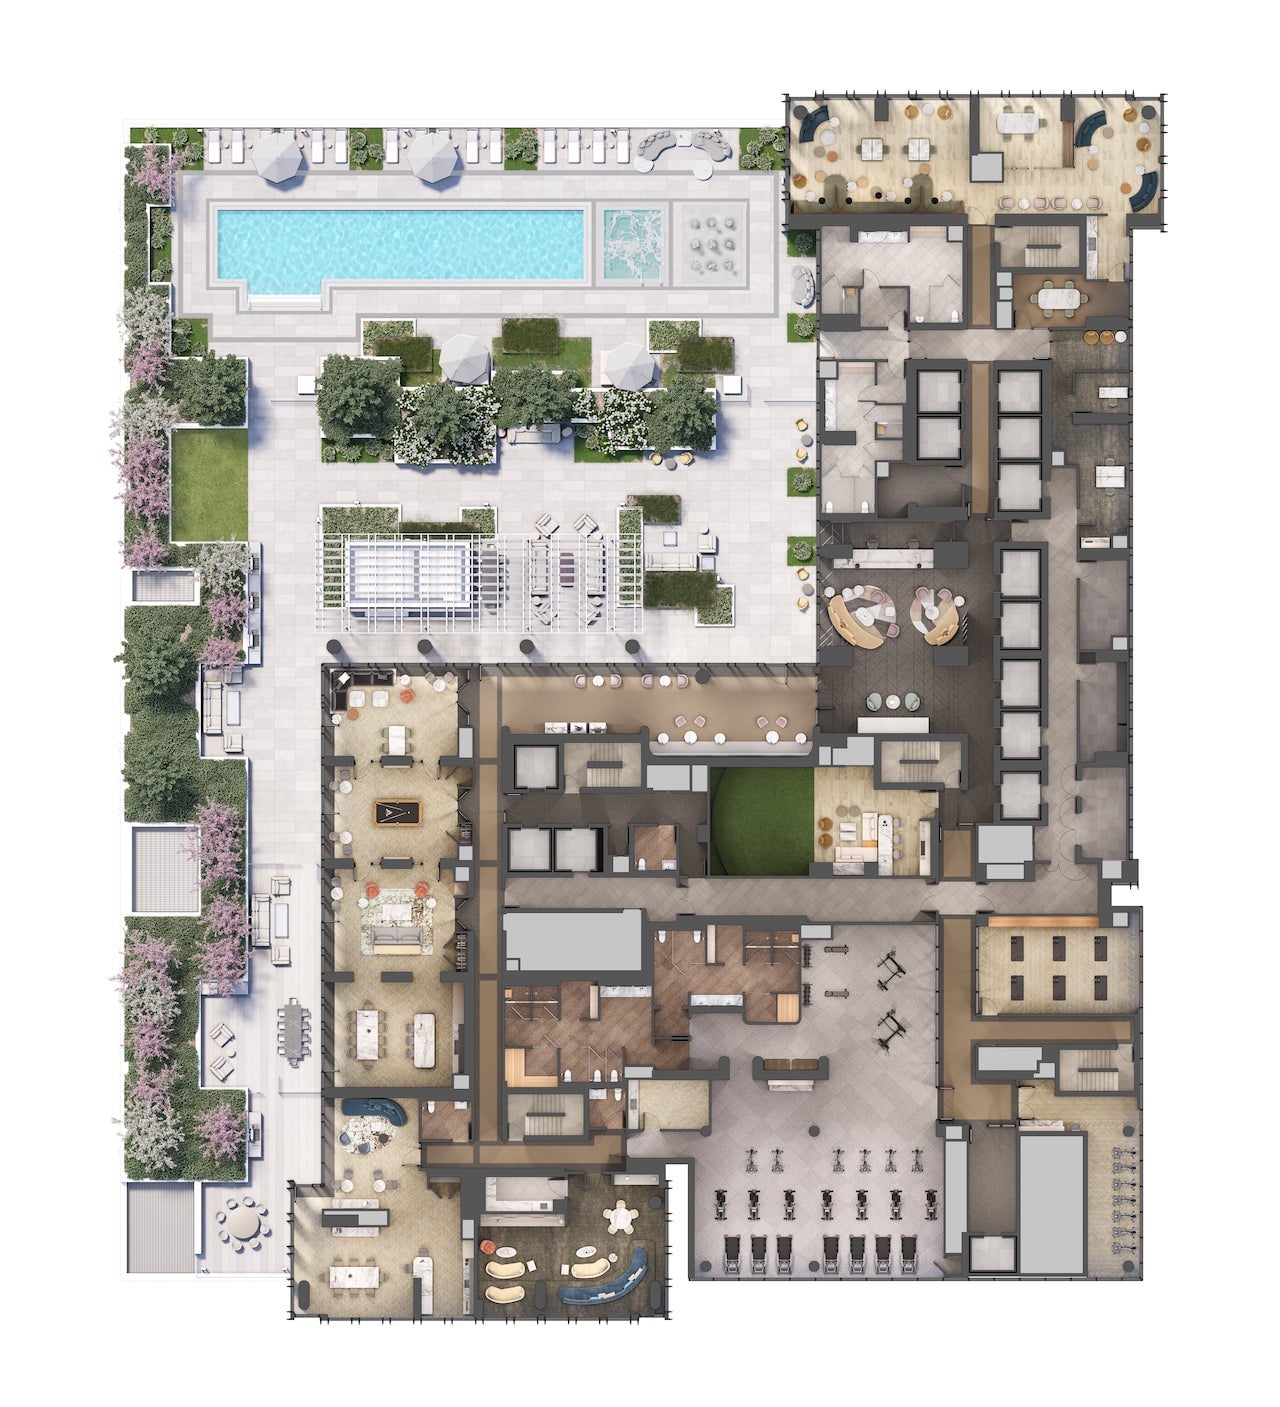 Rendering of The Pemberton Condos 7th floor amenities plan